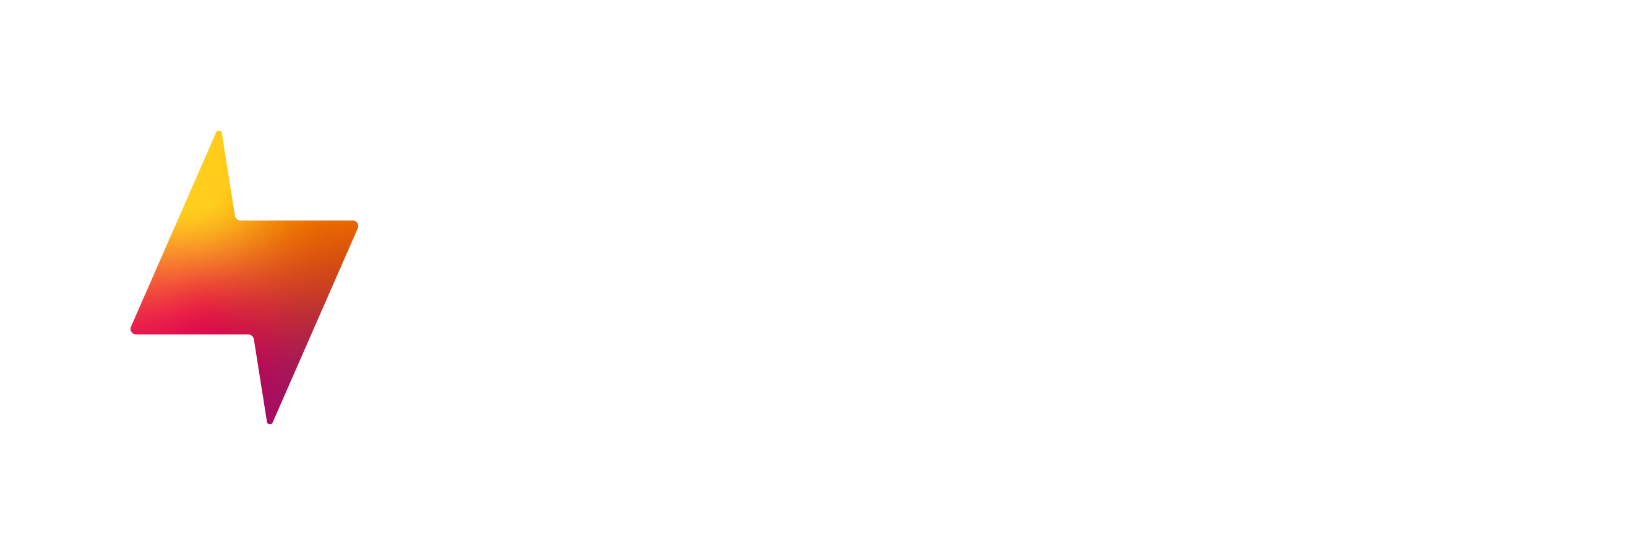 Energy Ombudsman